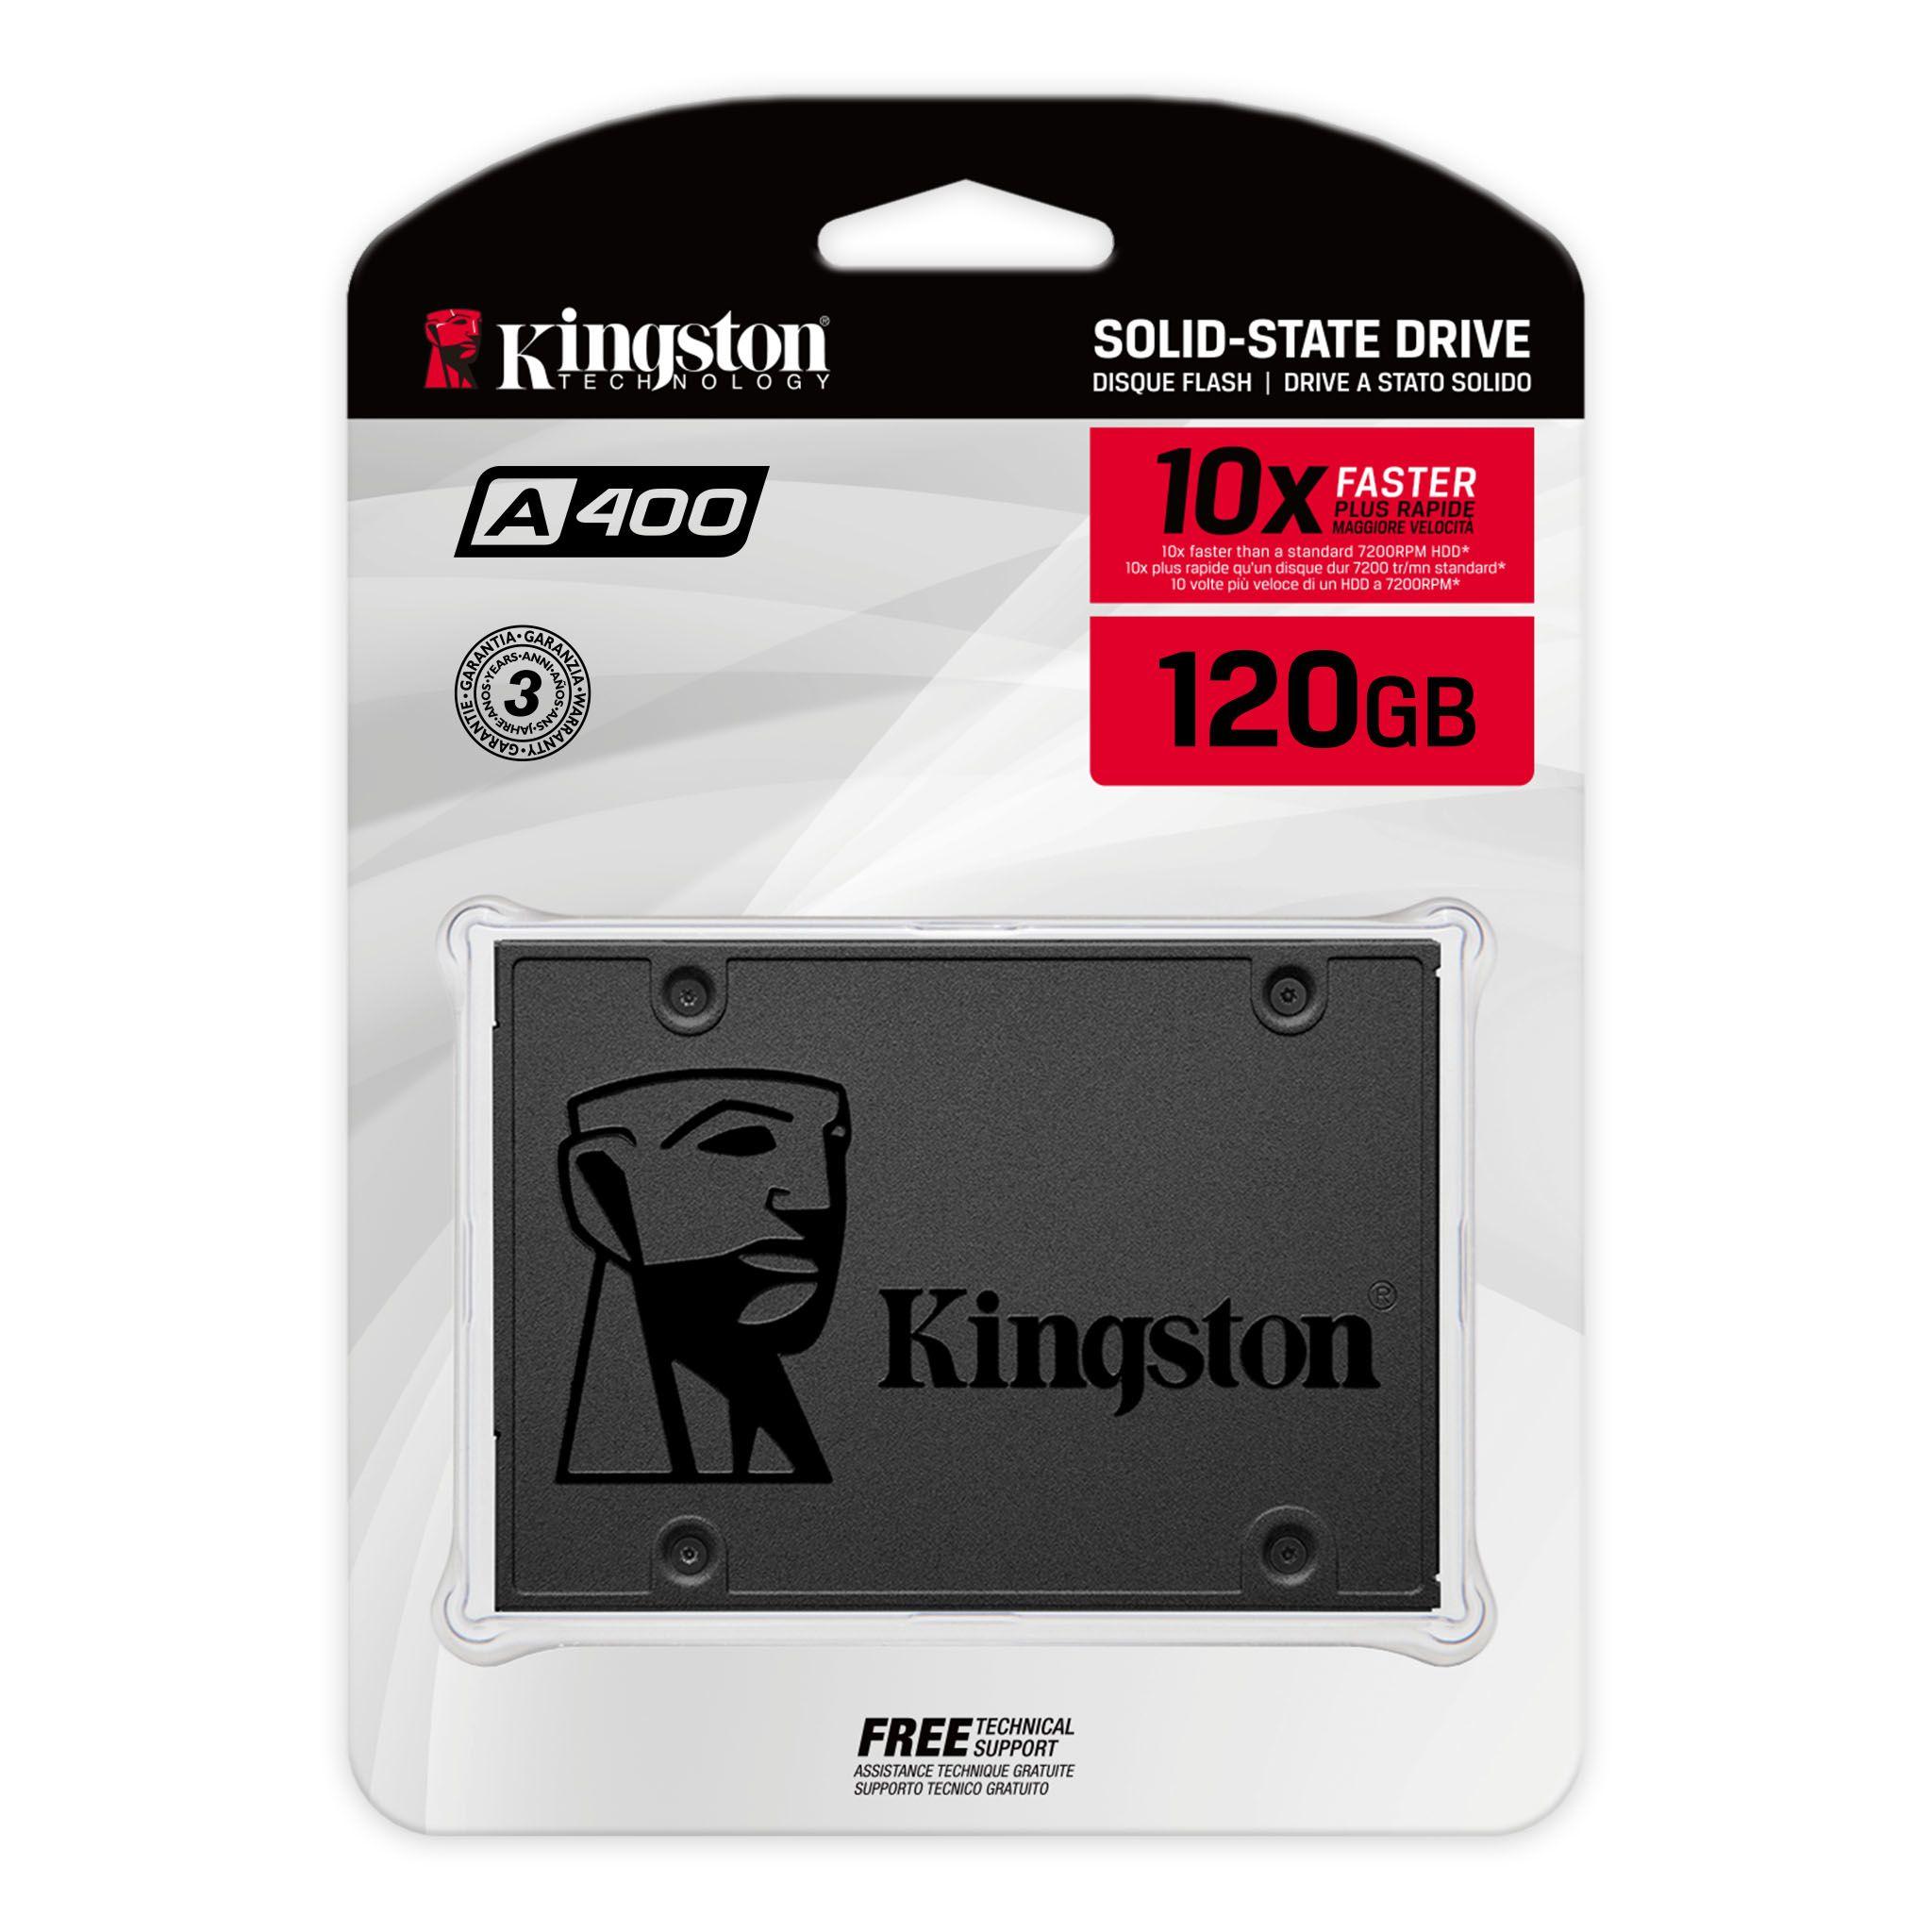 KINGSTON SSD 120GB - Kosmos Renew